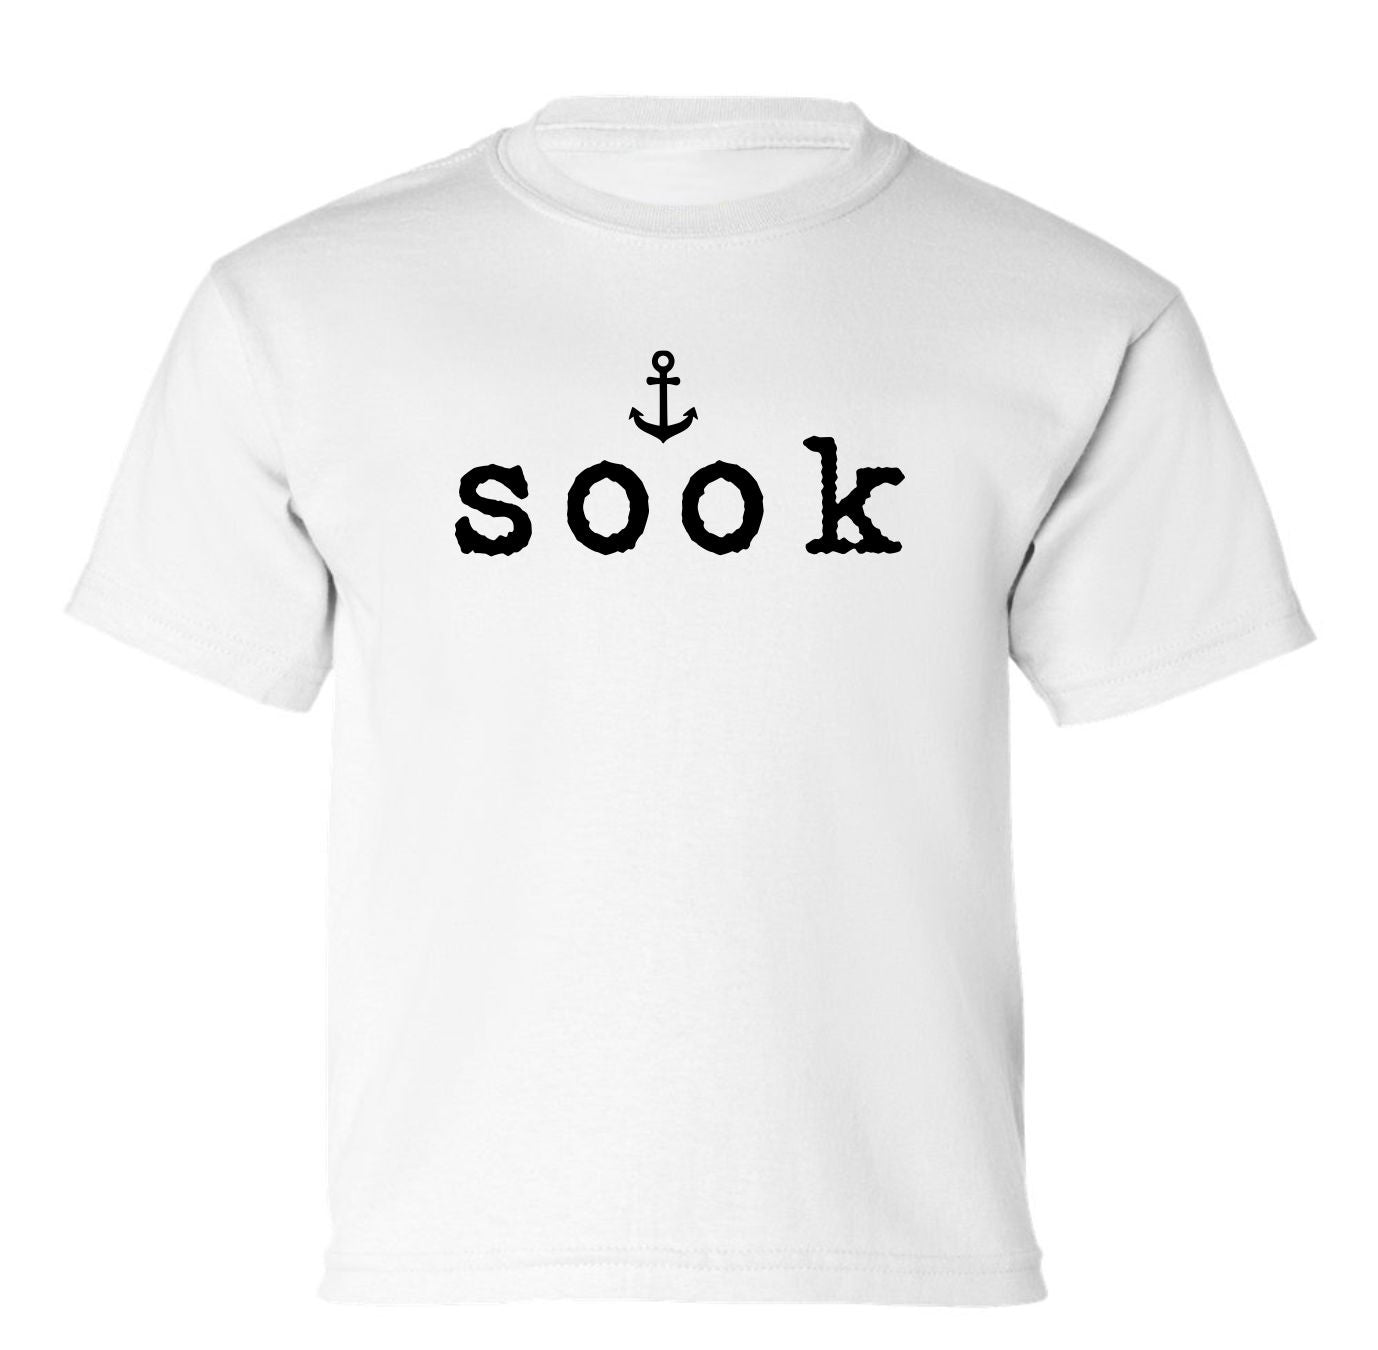 "Sook" Toddler/Youth T-Shirt